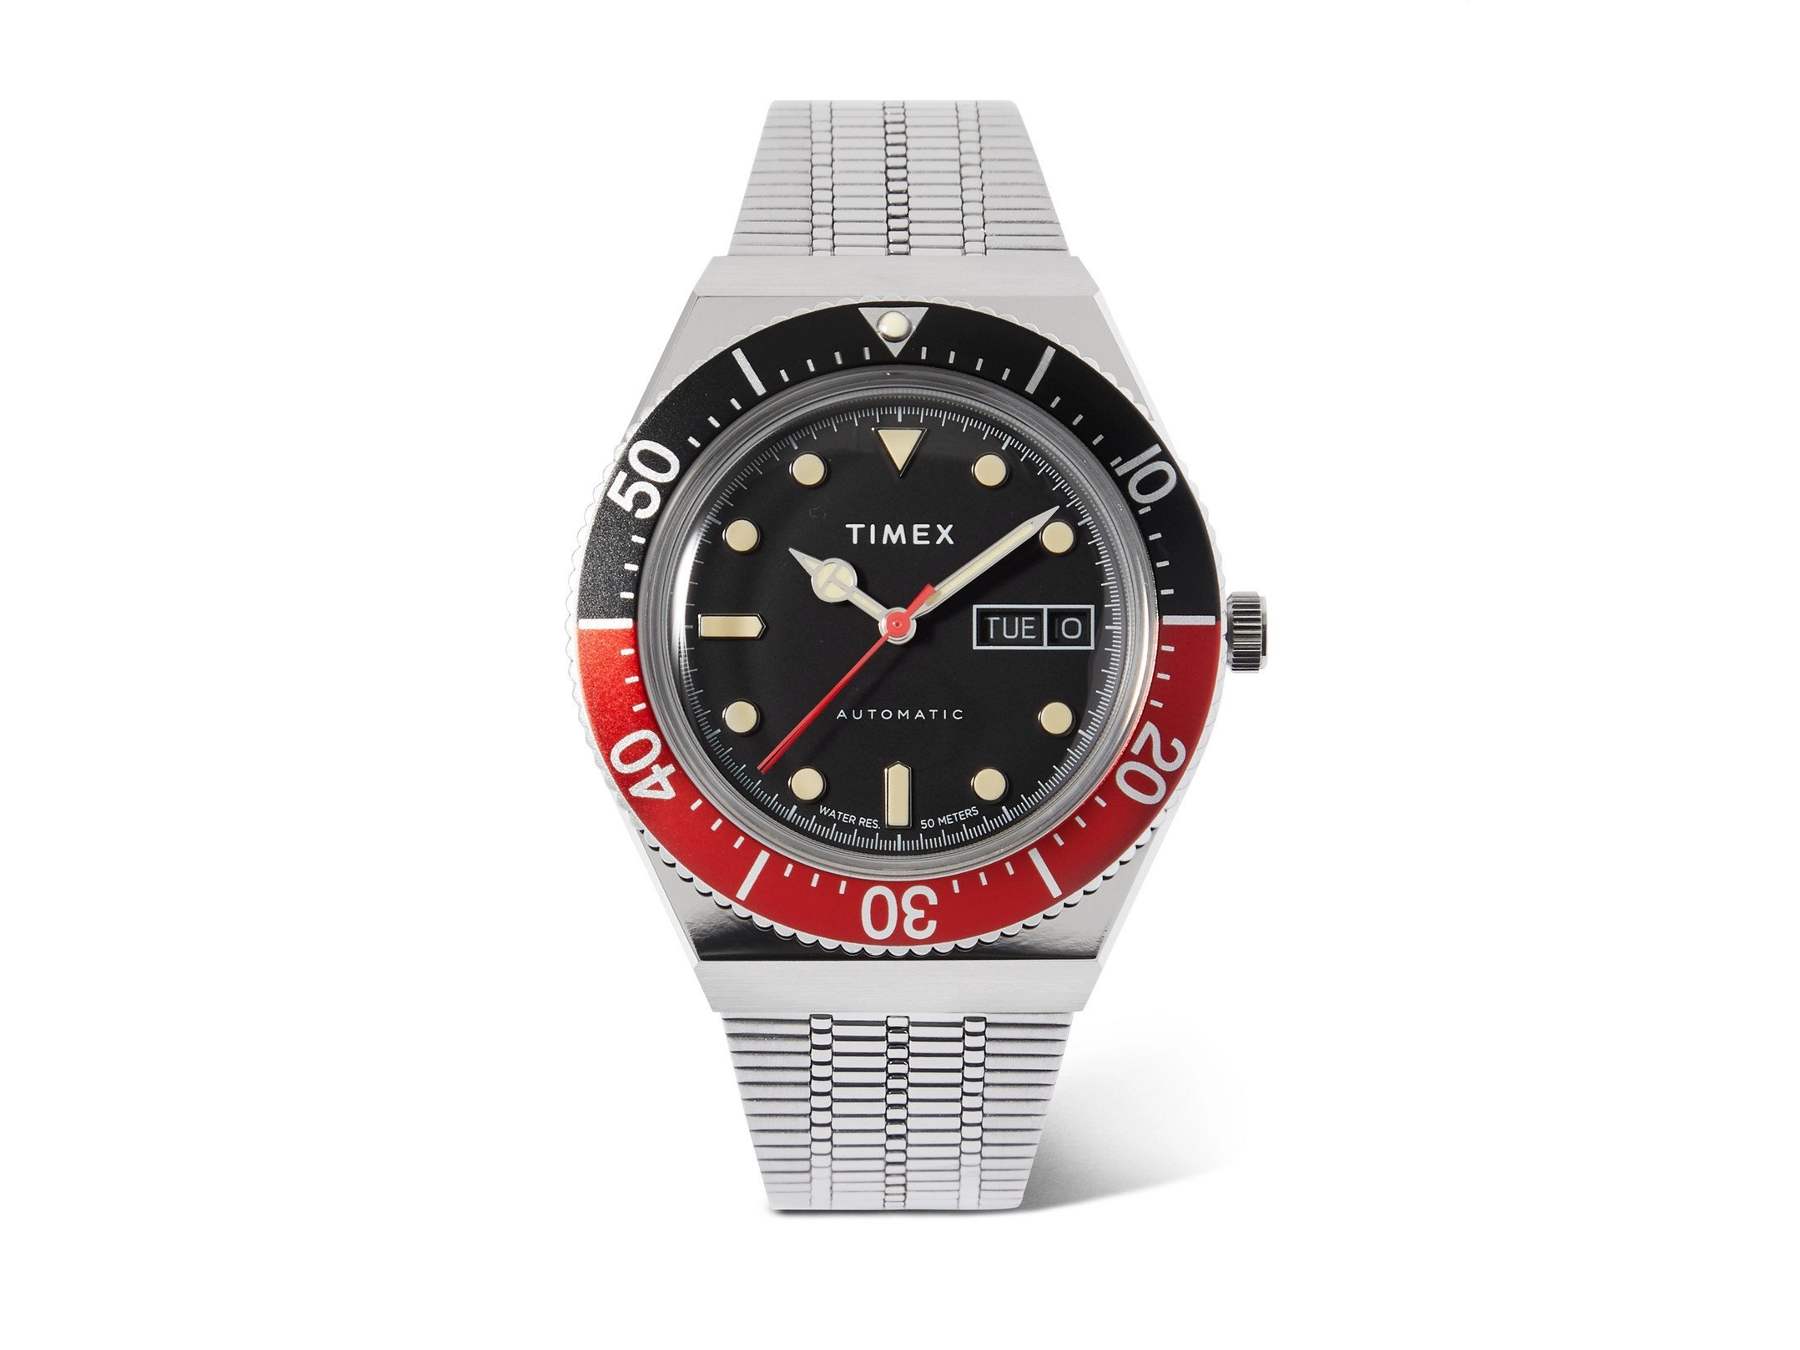 Timex M79 Dive Watch